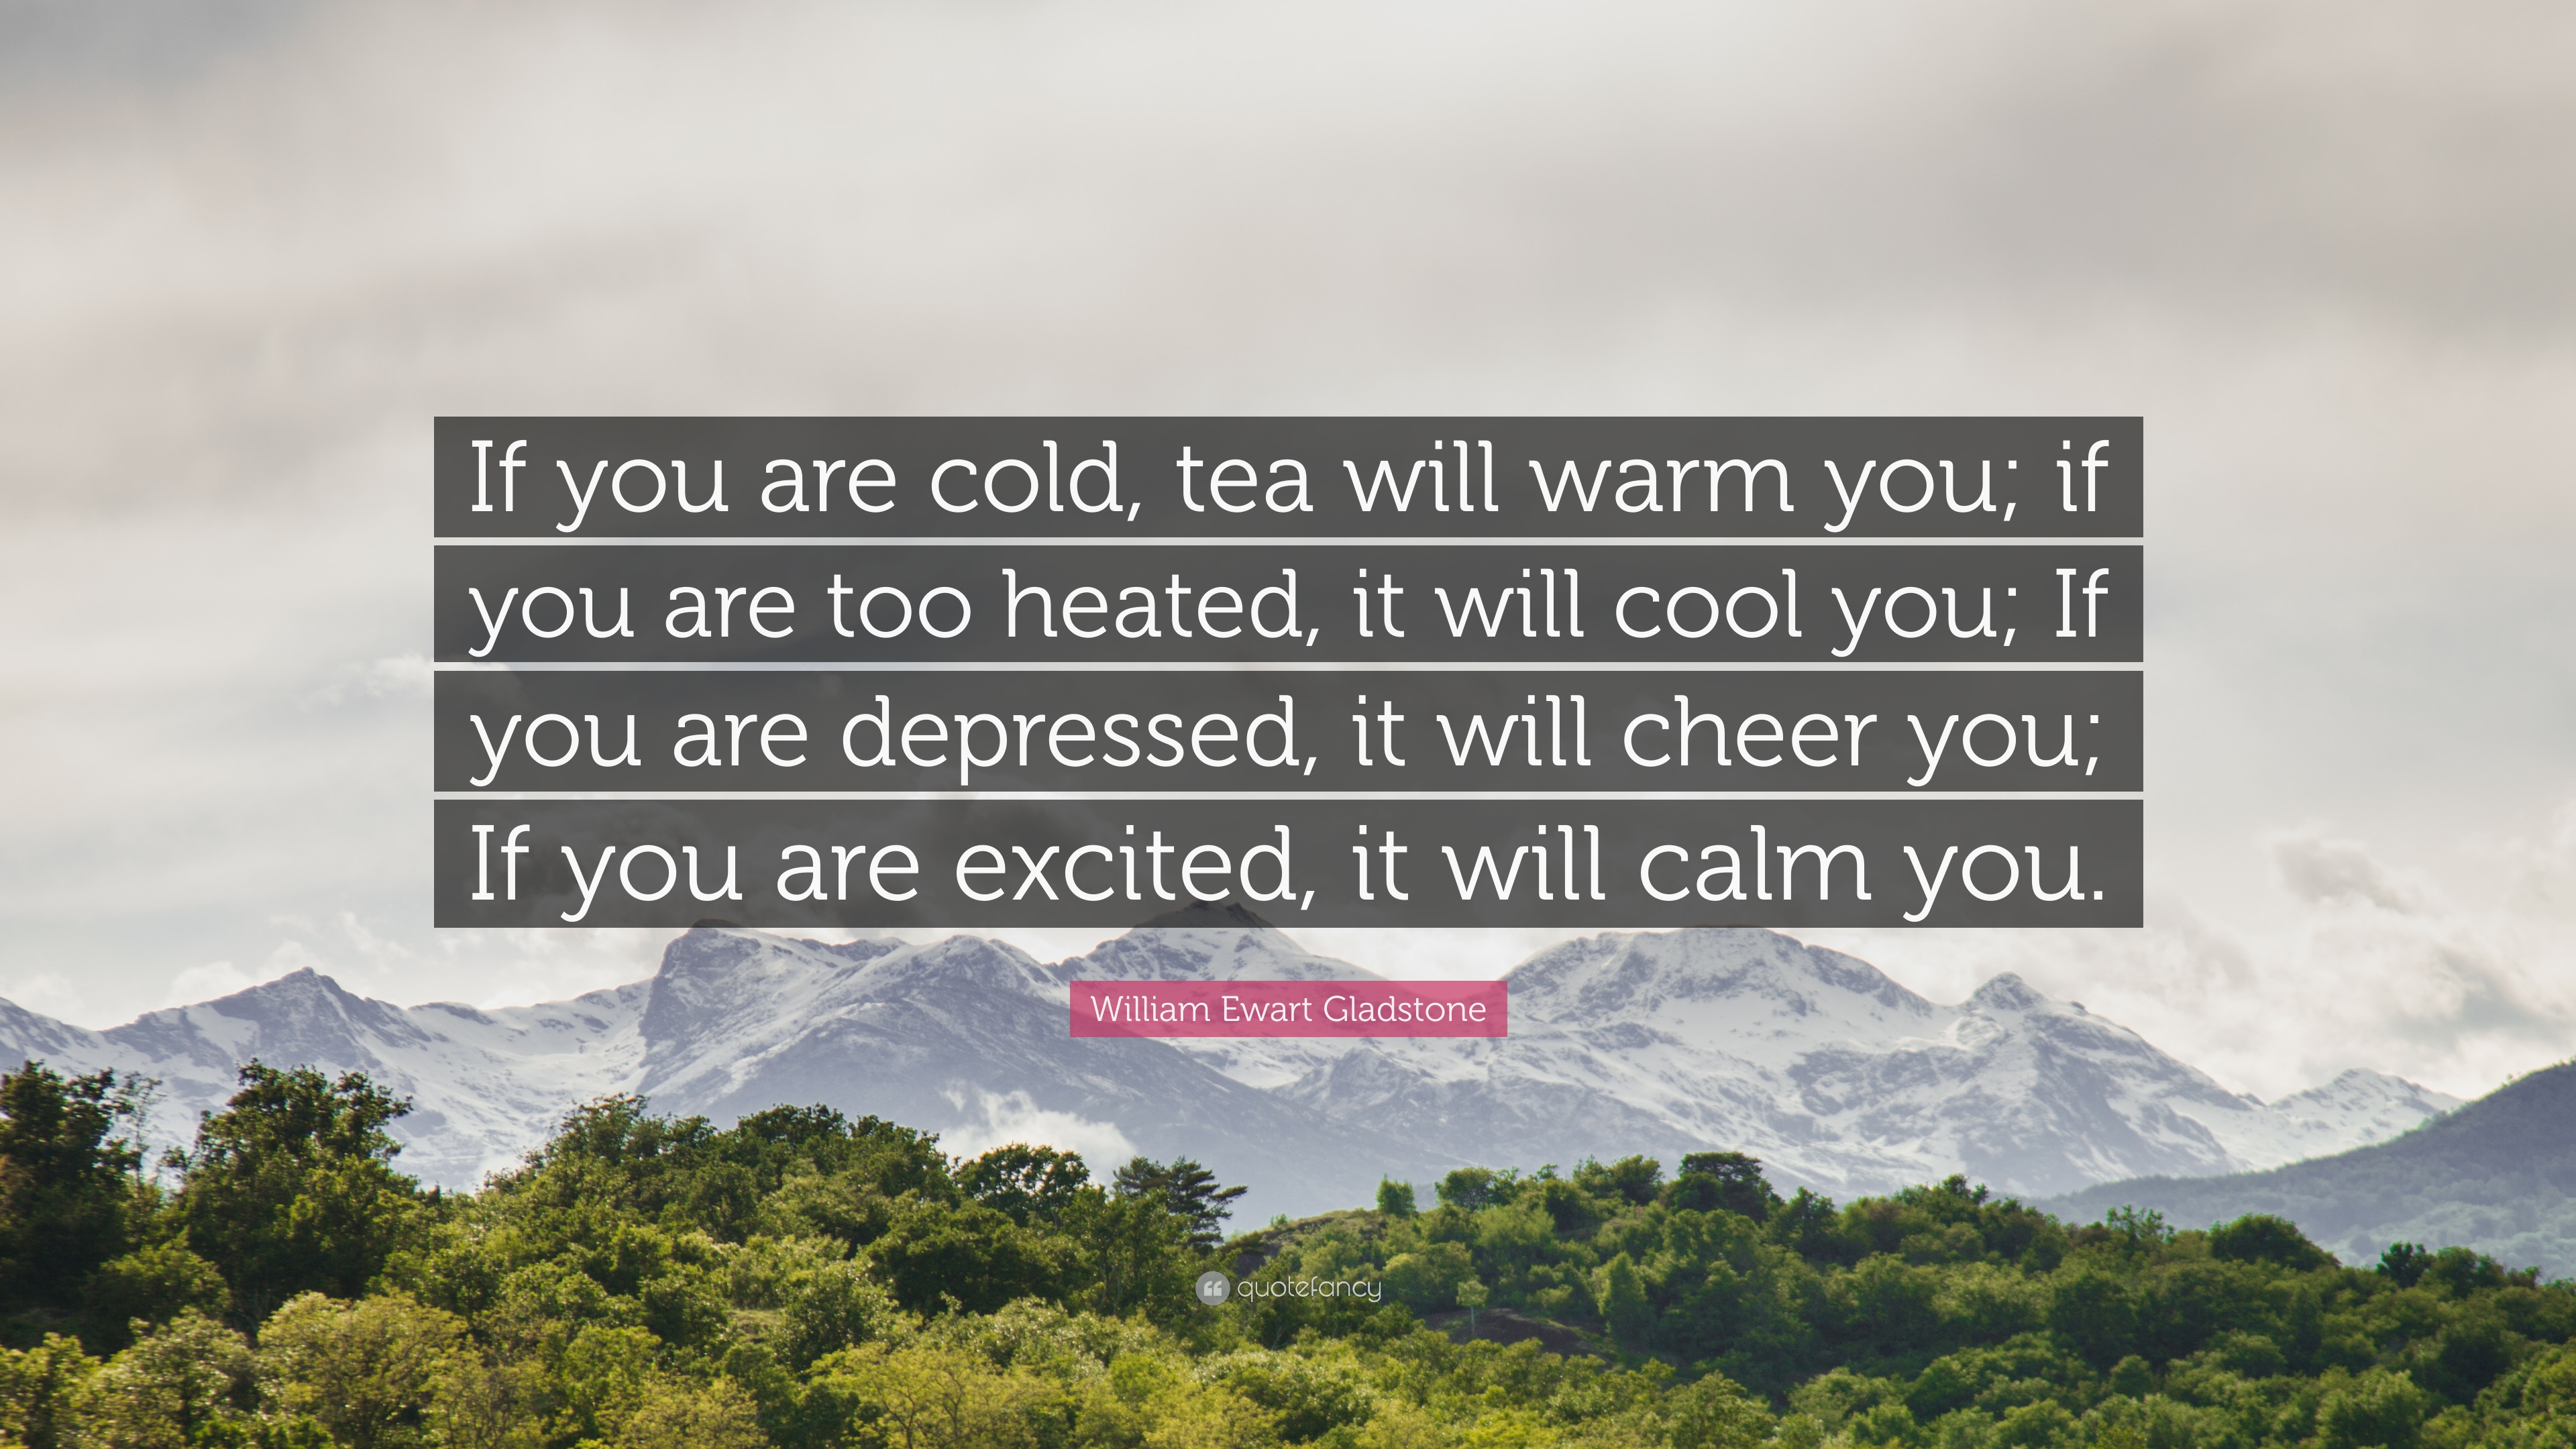 William Ewart Gladstone Quote: “If you are cold, tea will